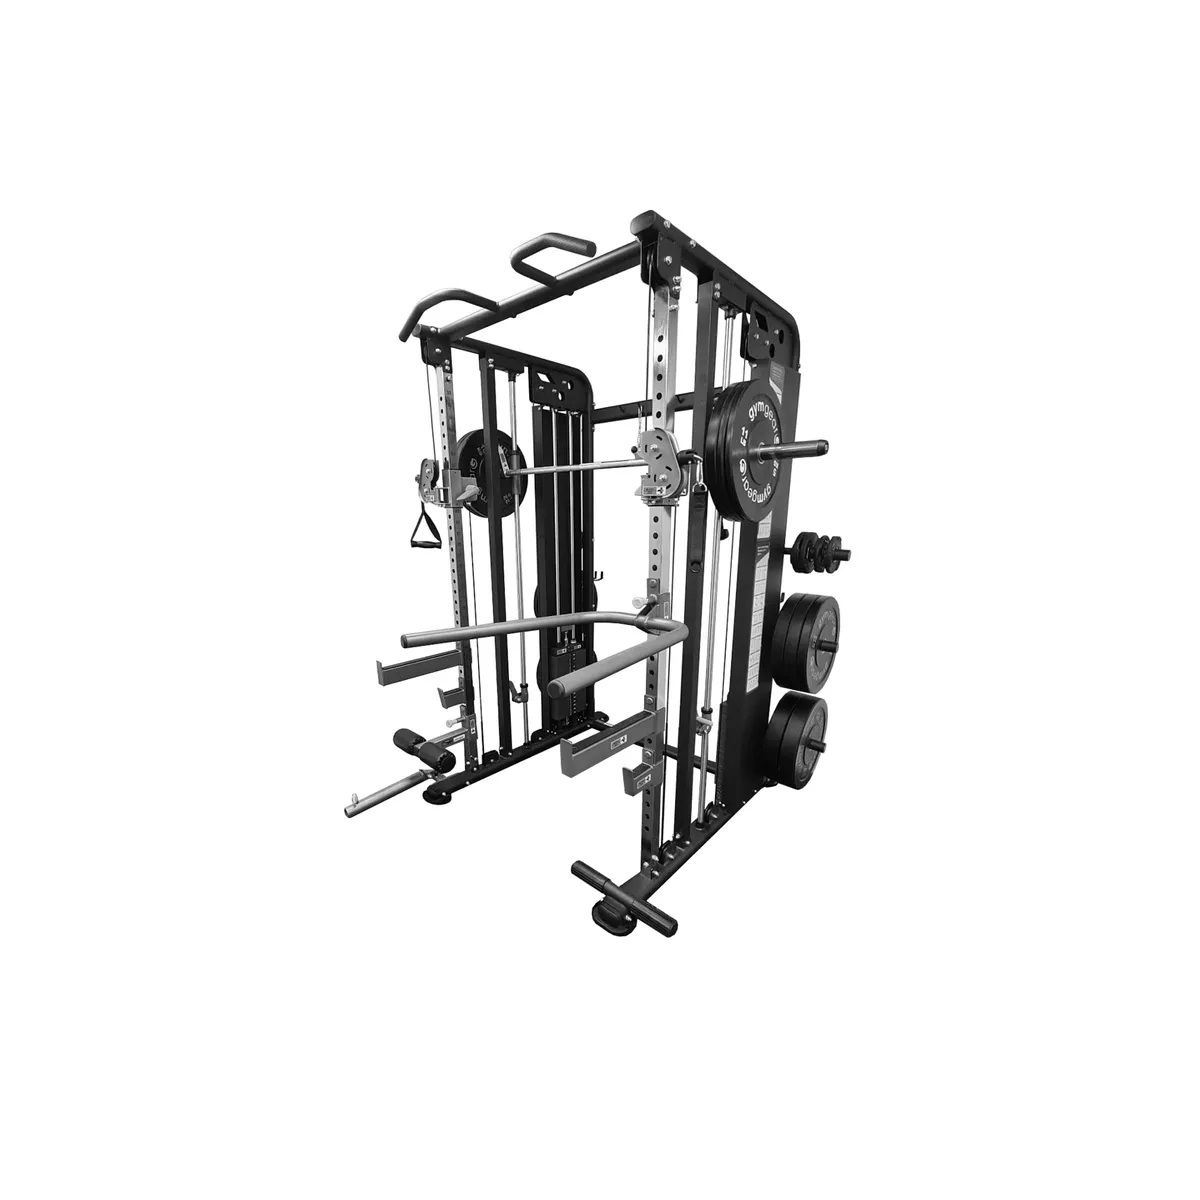 Gym Gear Rhino Pro Strength System